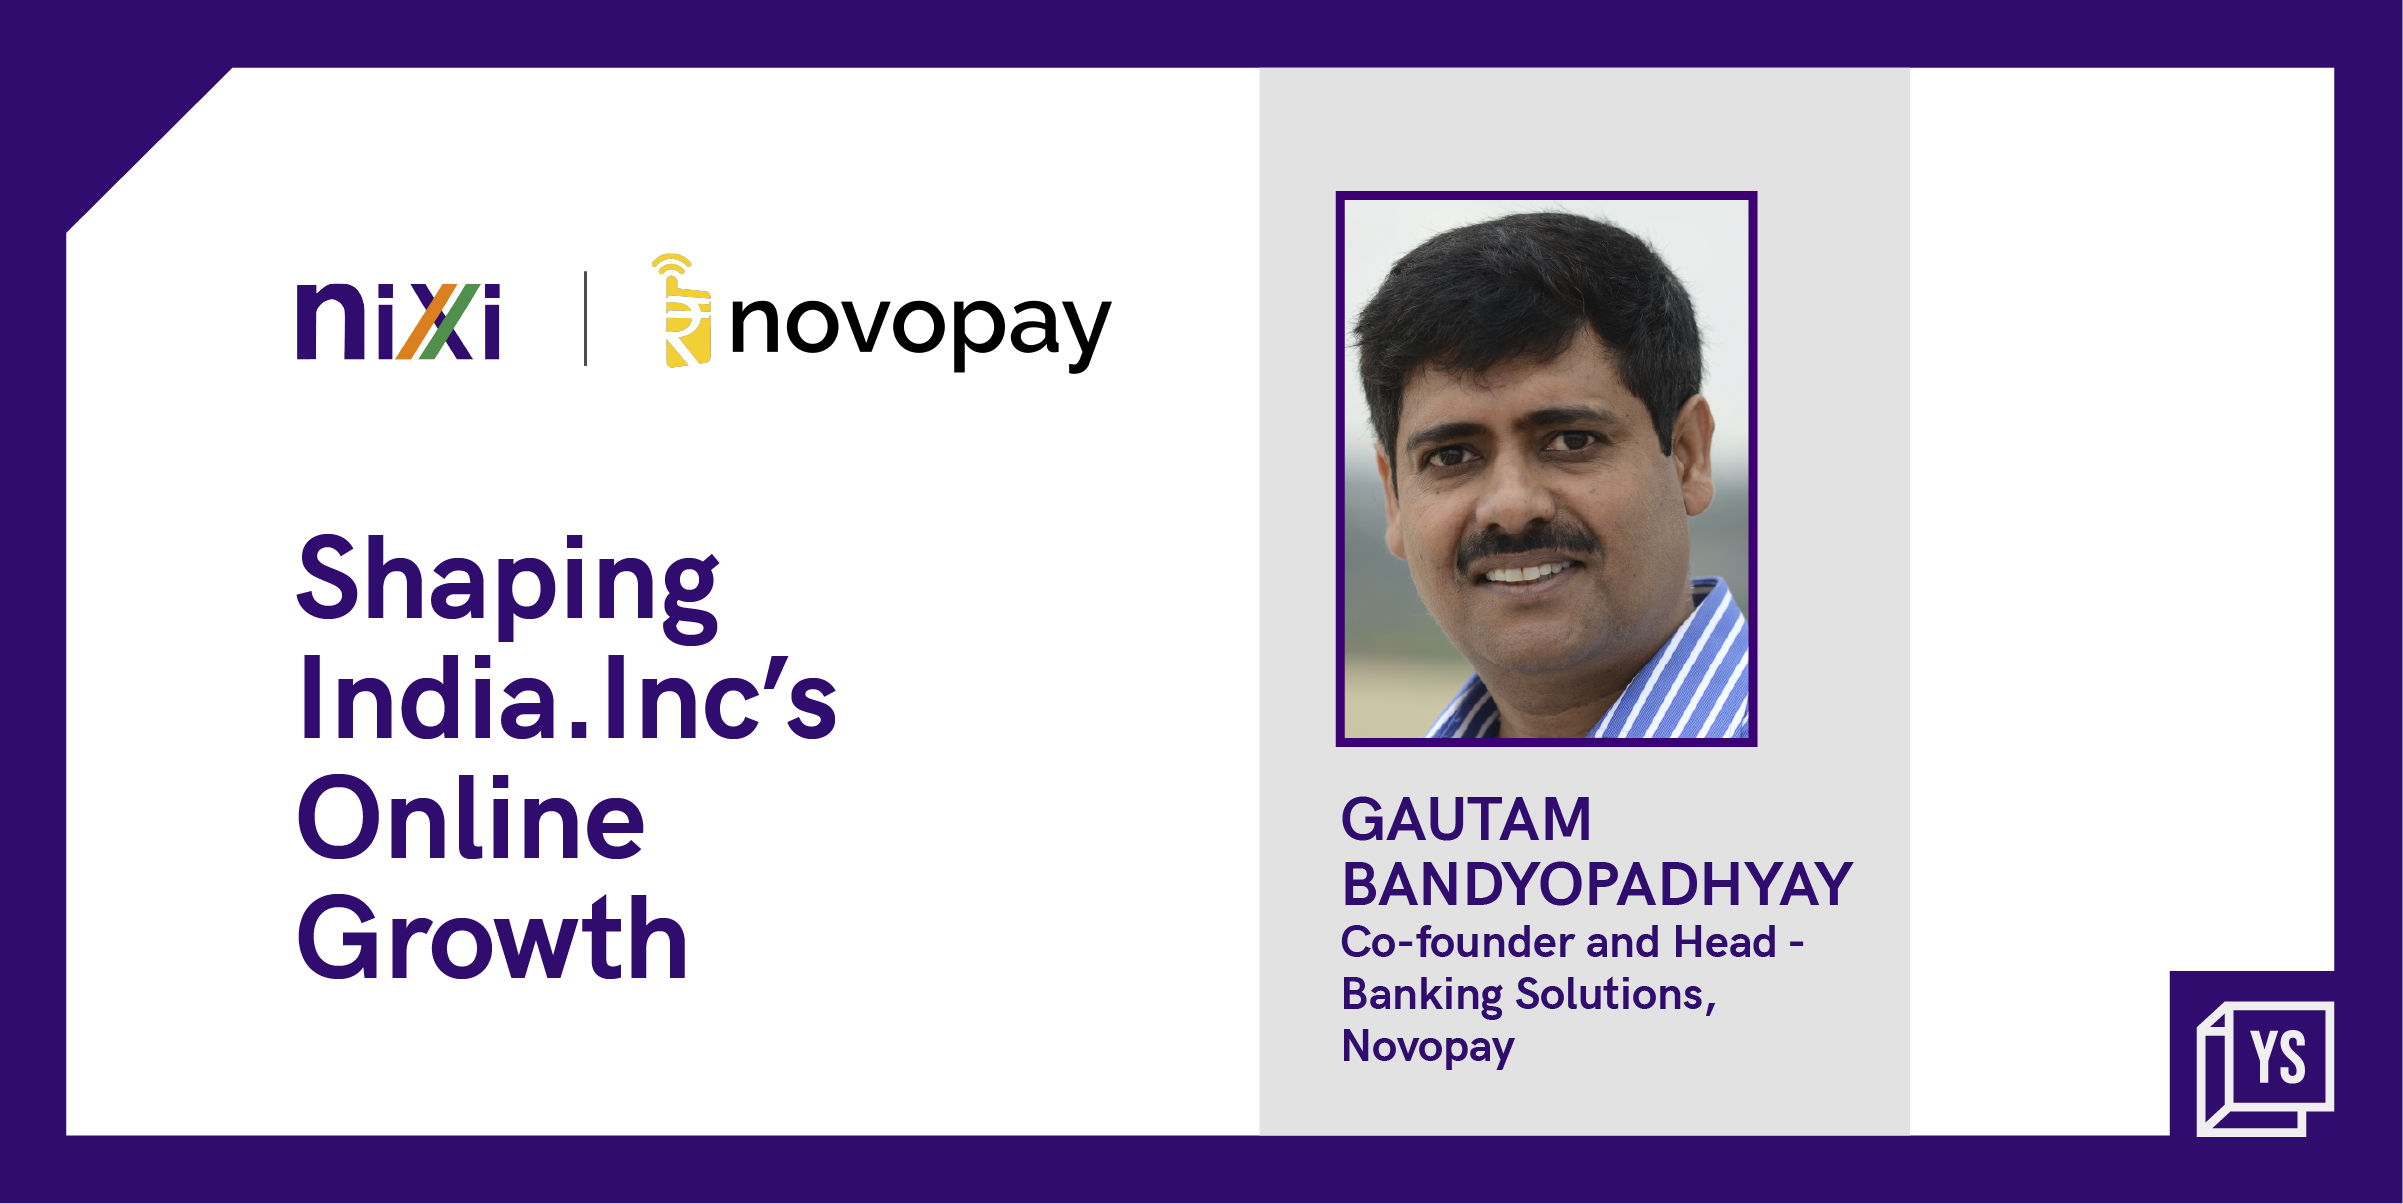 How Novopay bridges the gap between banking services and unbanked sectors